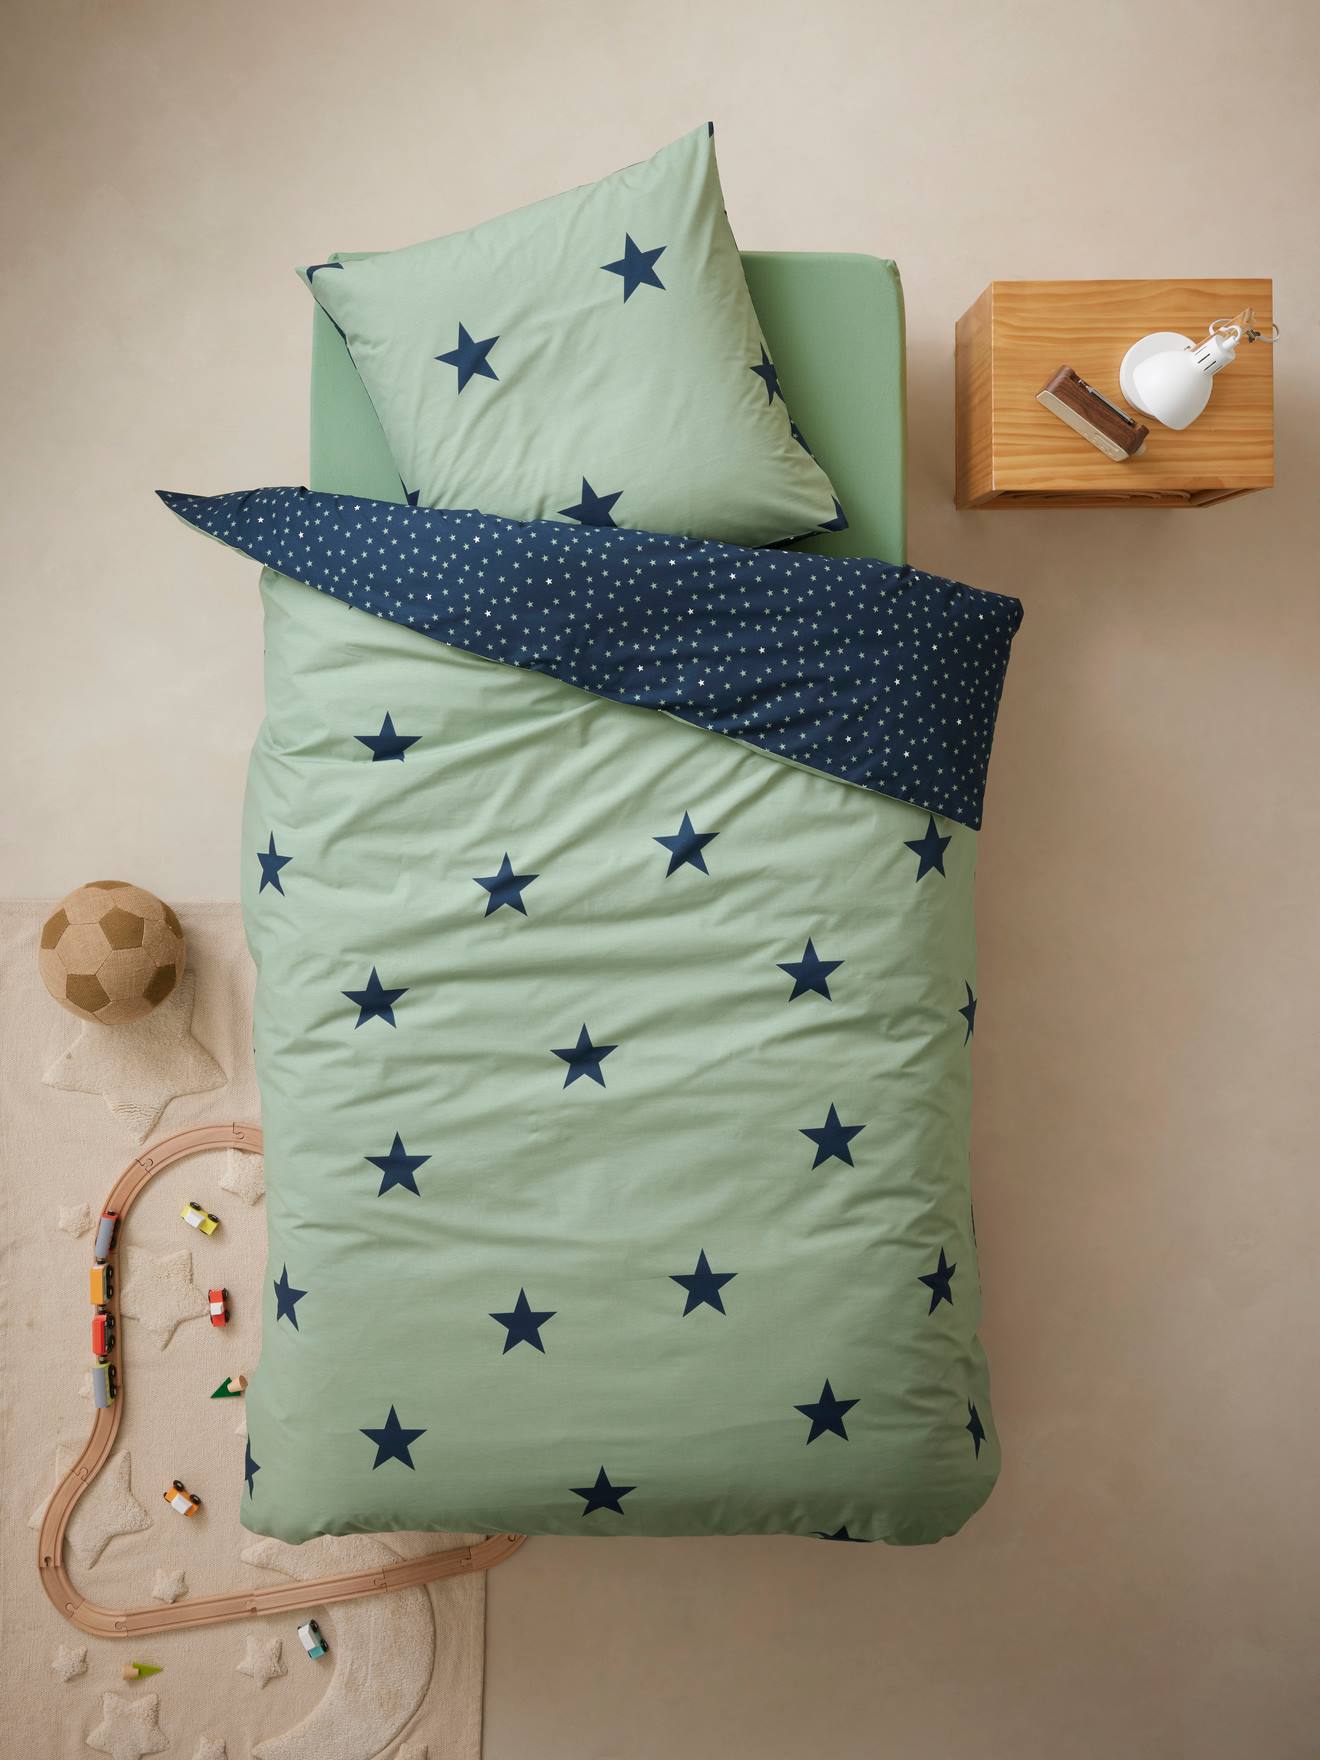 Children’s Duvet Cover + Pillowcase Set, DREAM BIG, basics green/print